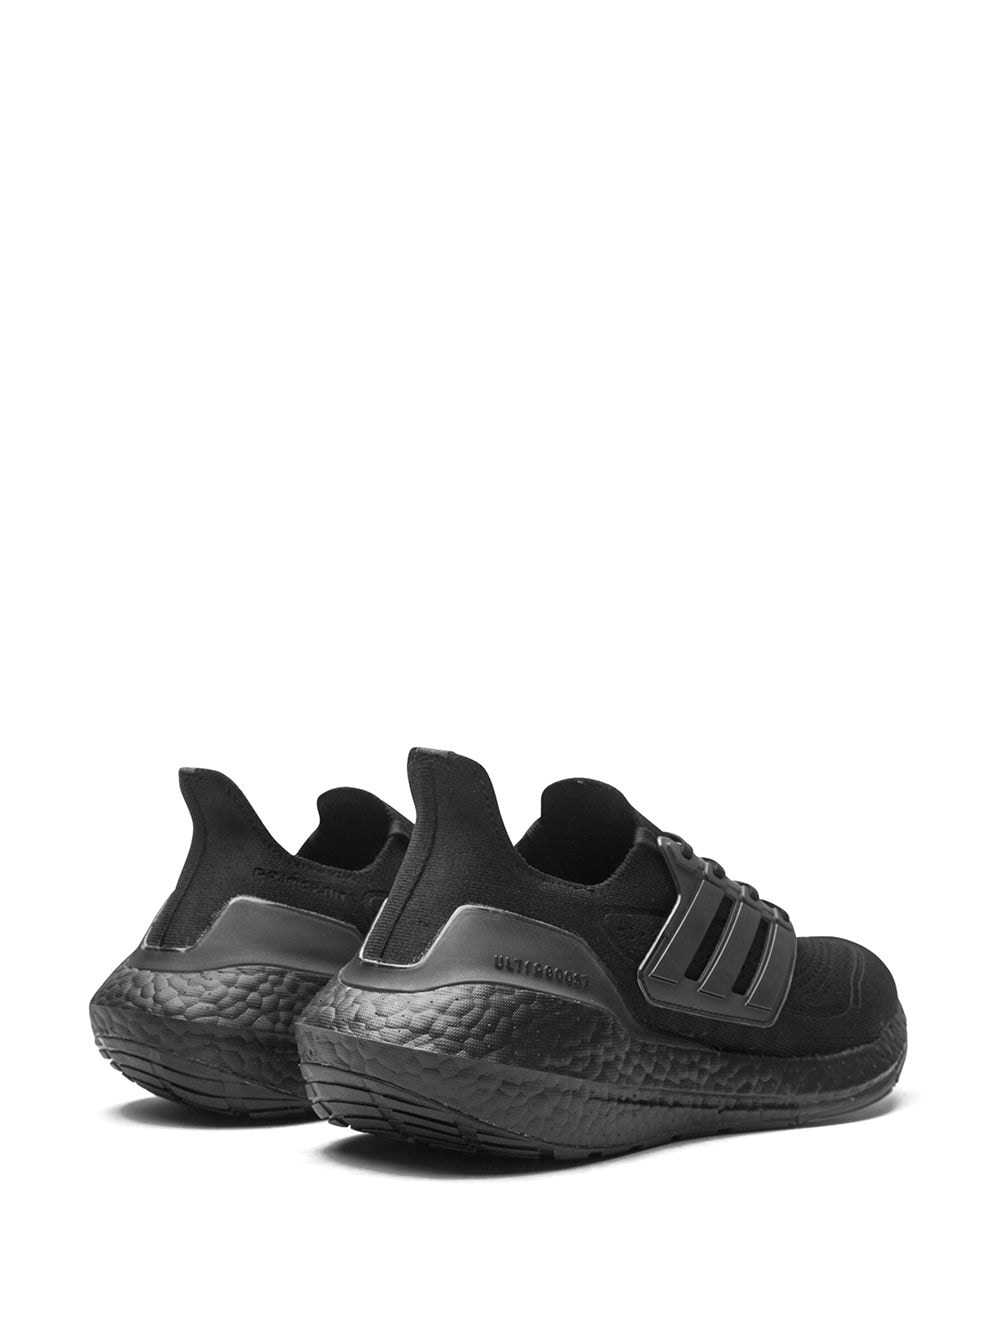 Shop Adidas Originals Ultraboost 21 "core Black/core Black/core Bla" Sneakers